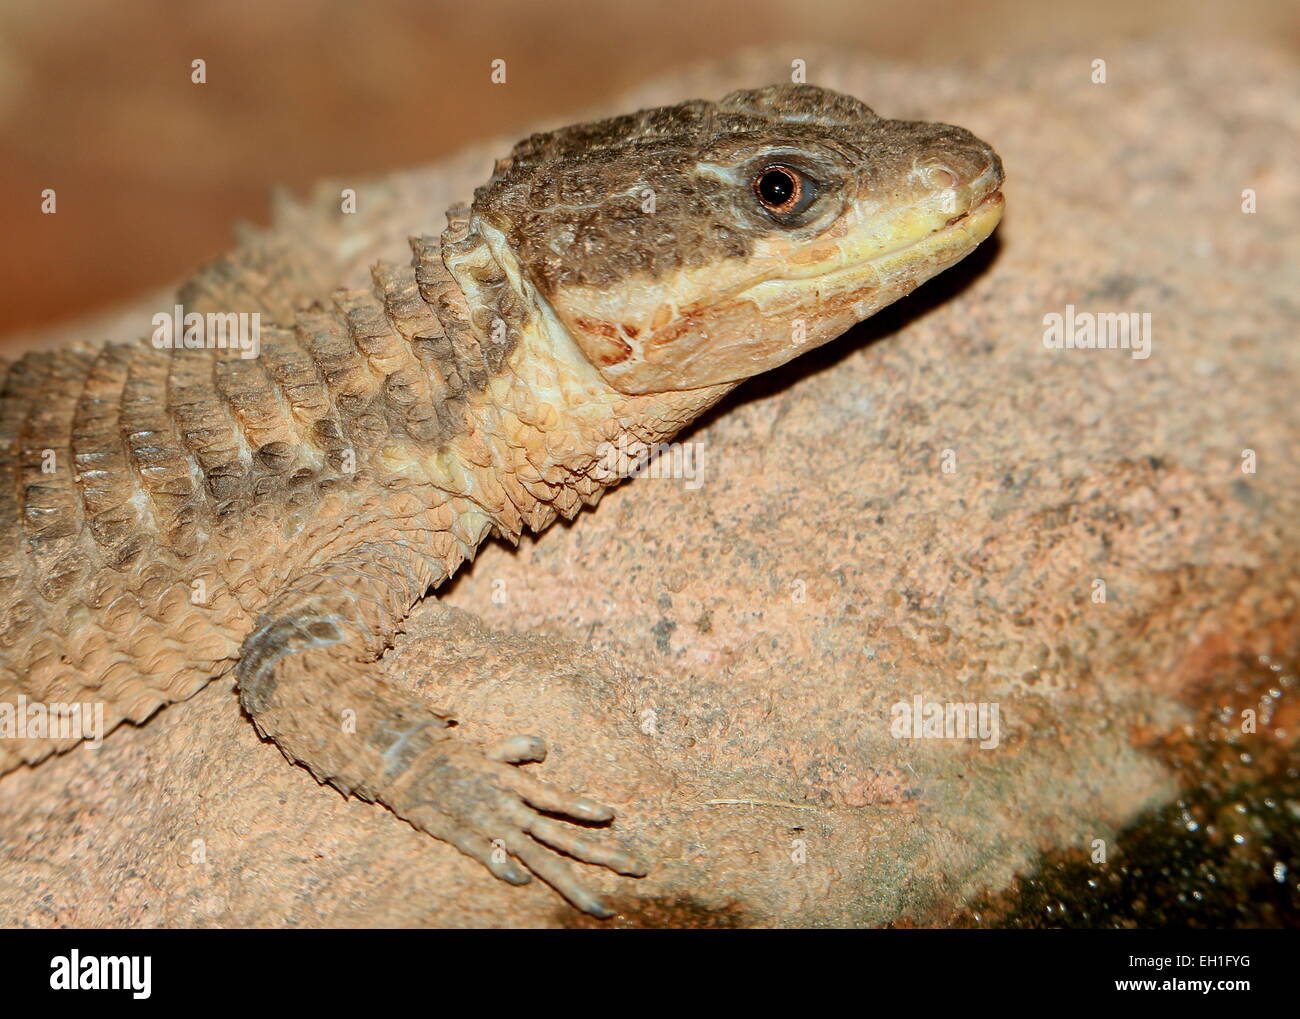 Alert East African spiny-tailed lizard (Cordylus tropidosternum) Stock Photo